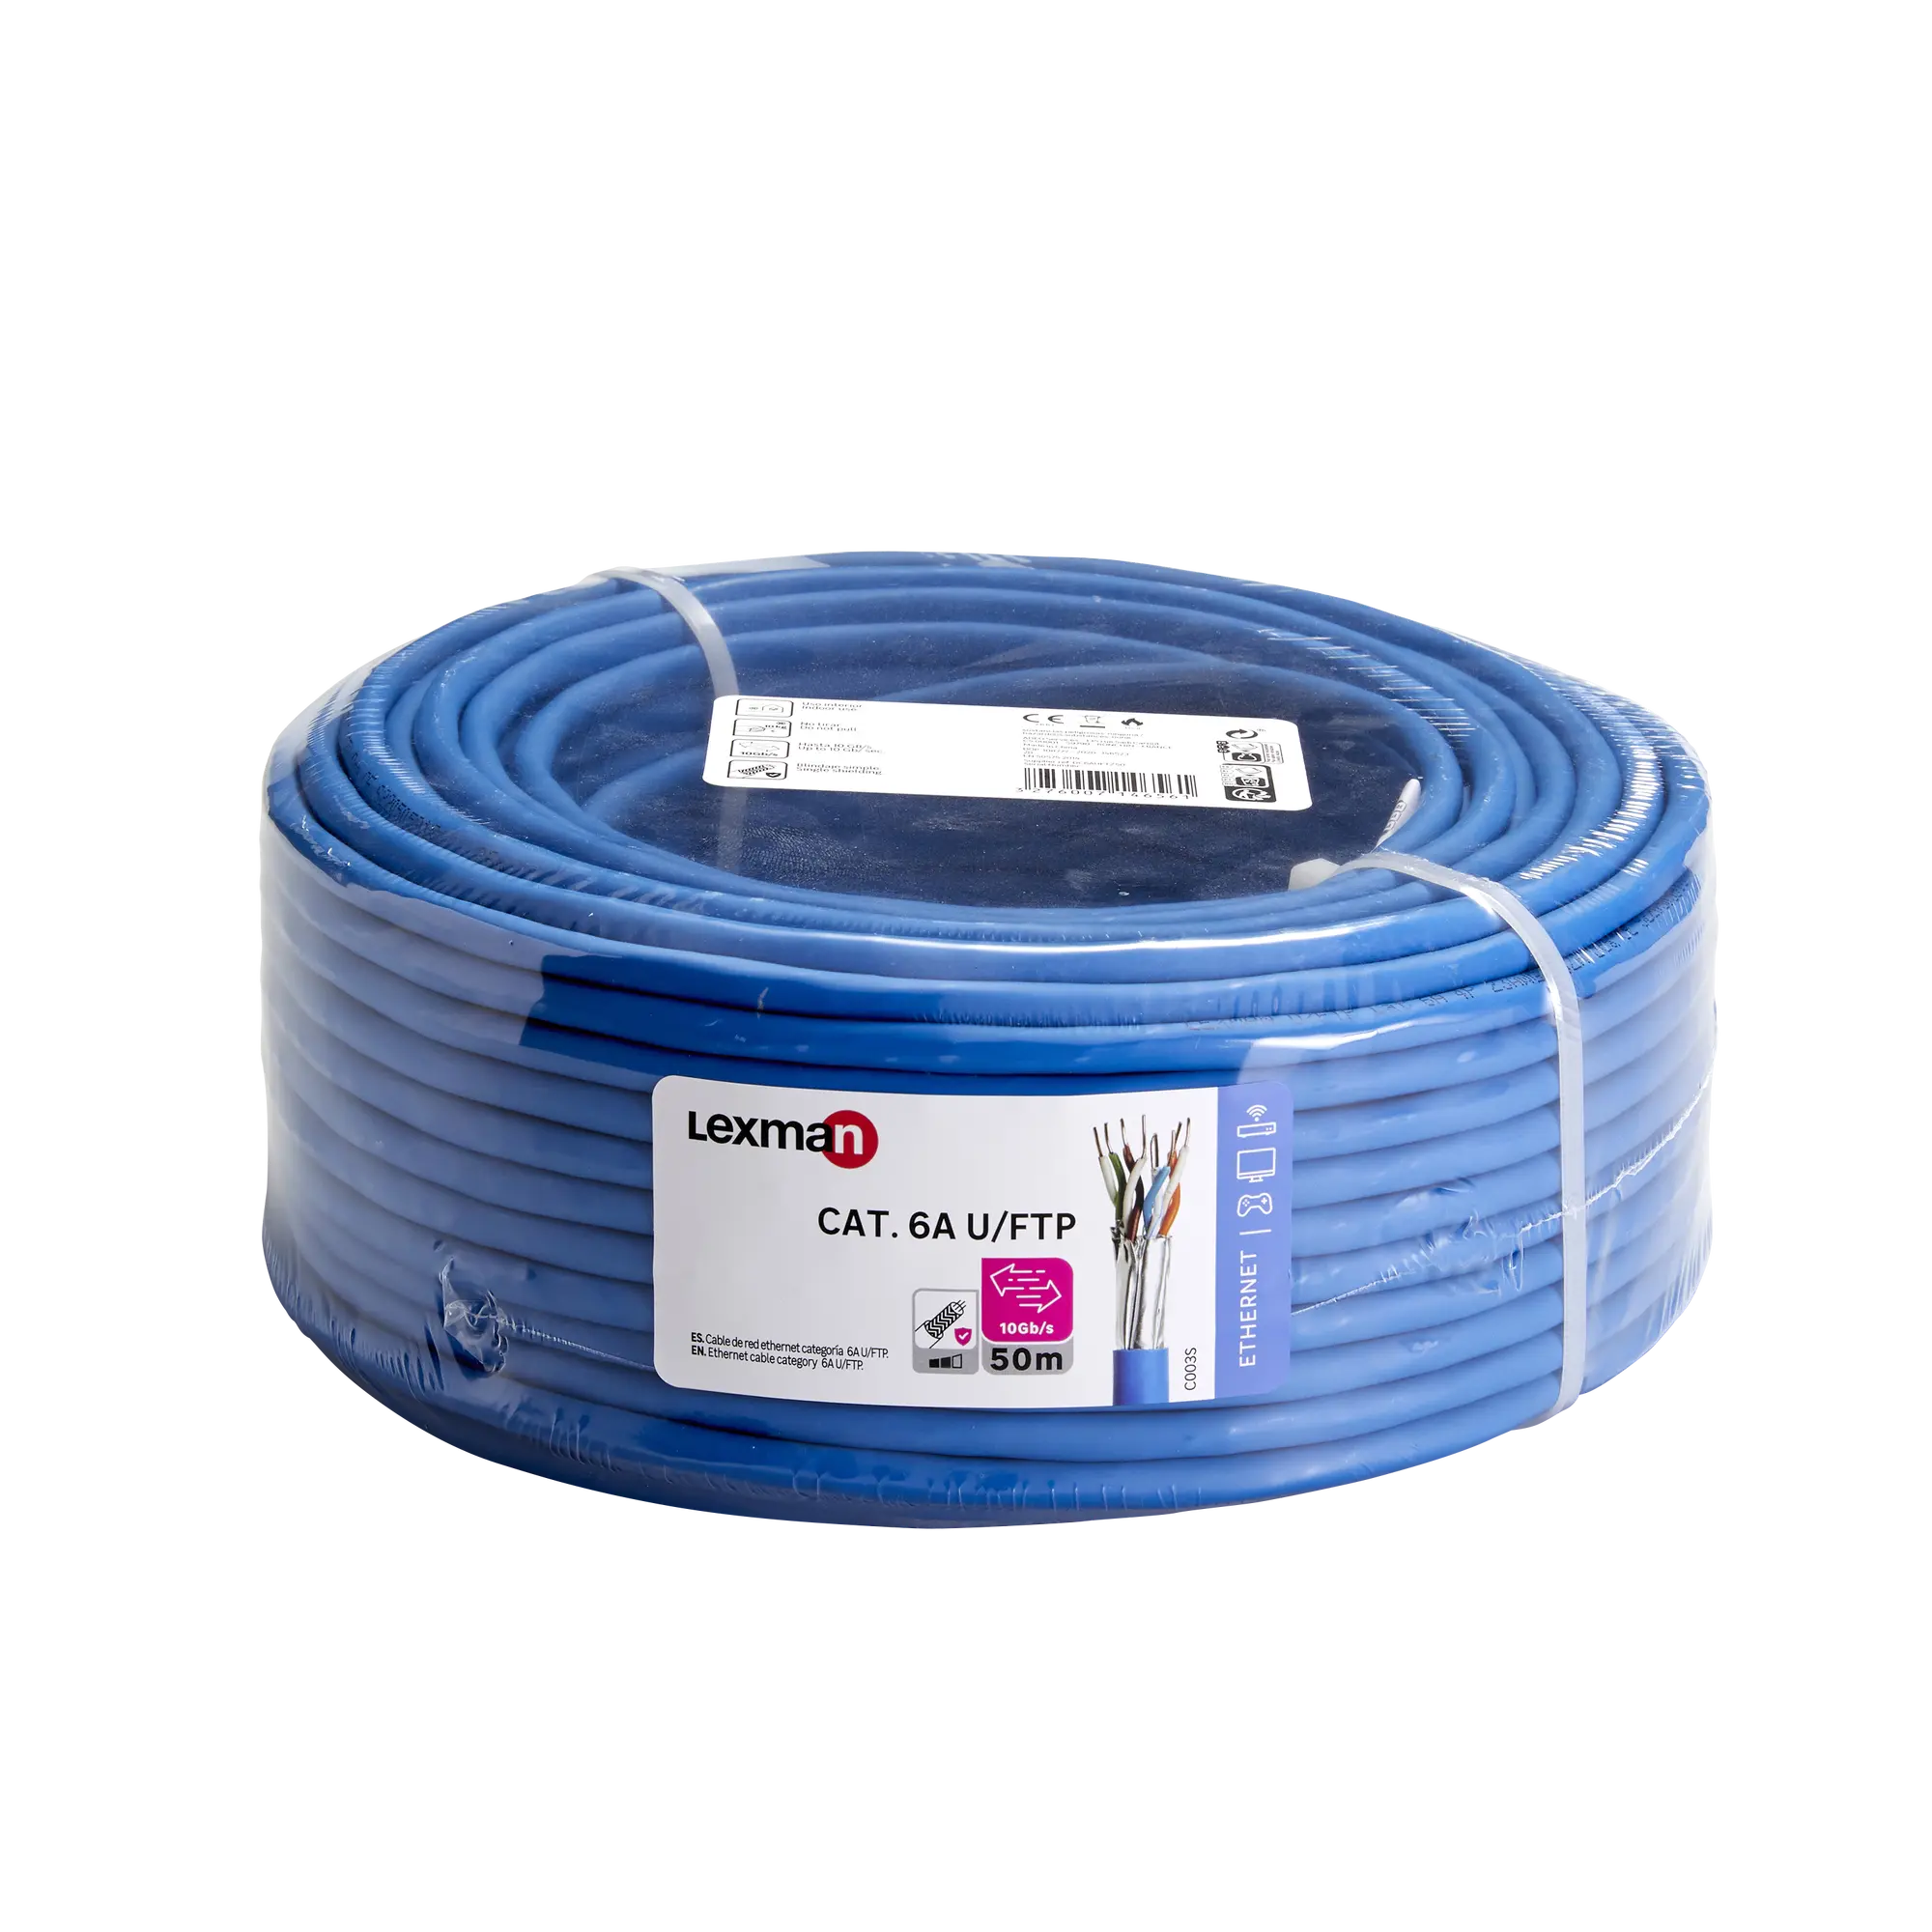 Cable de red ftp cat6a lexman 50m azul